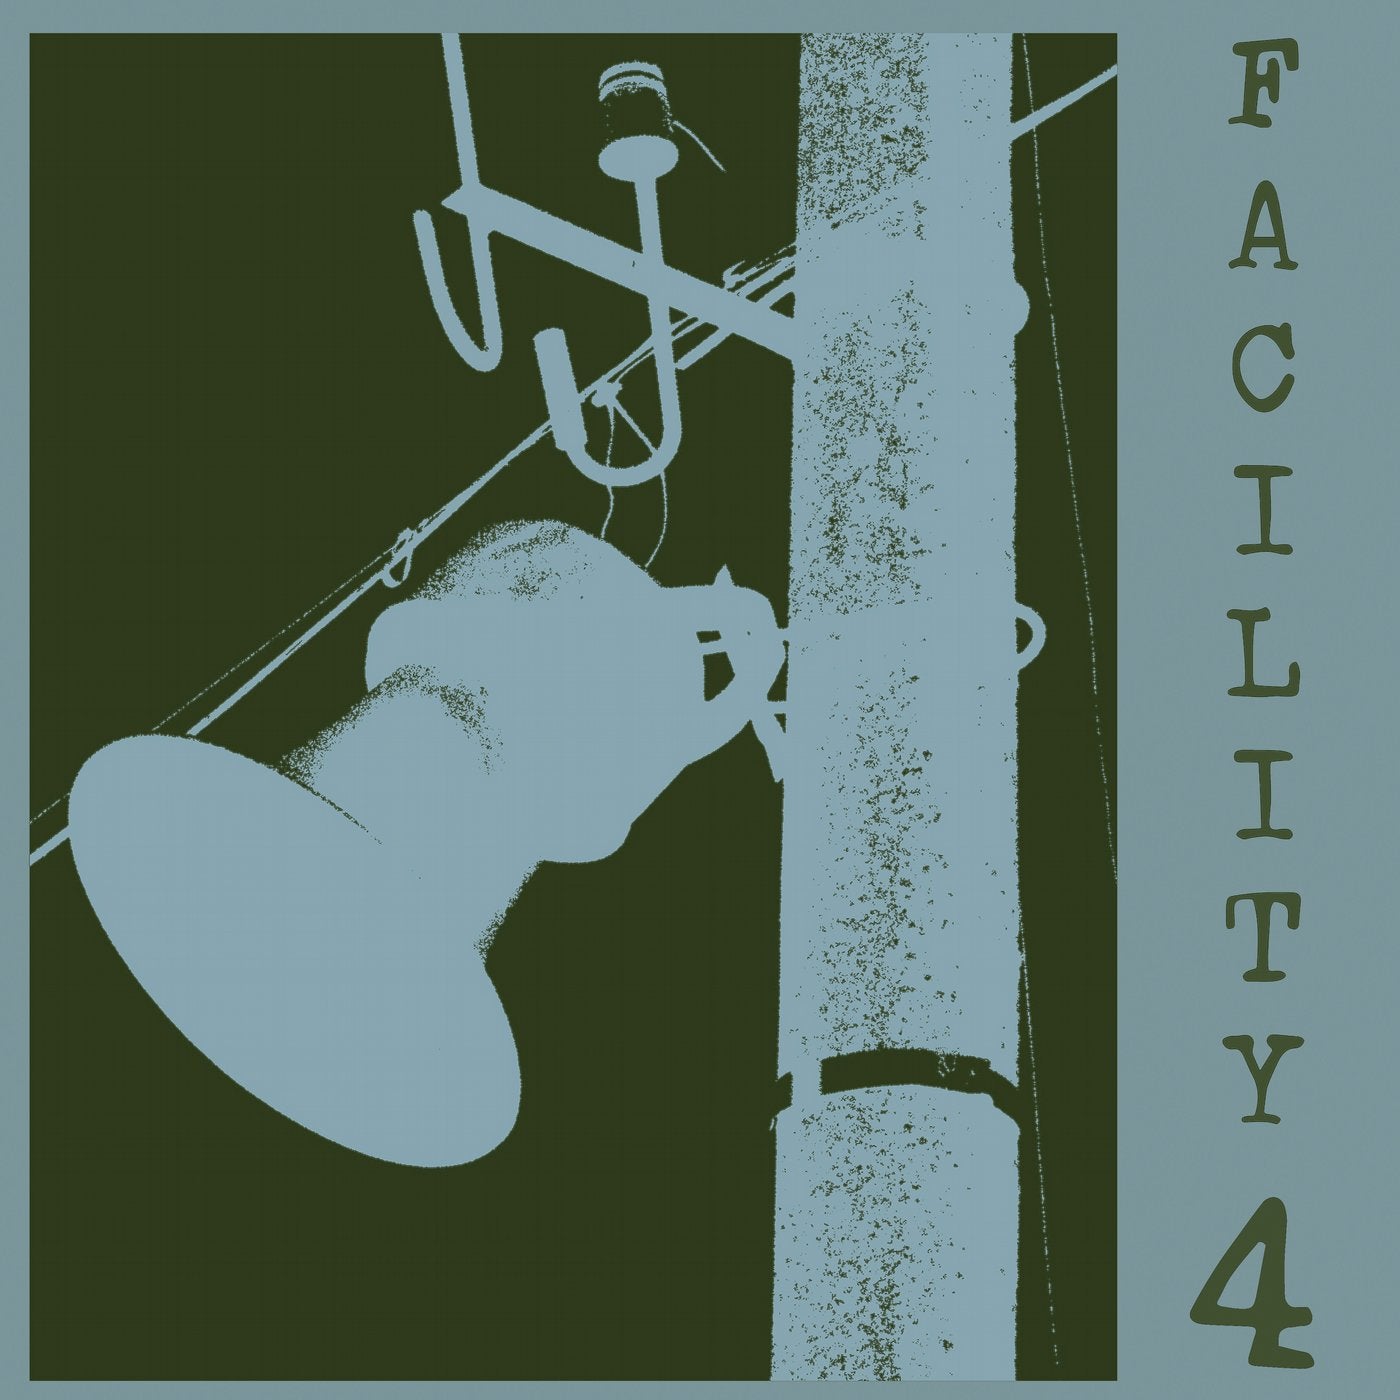 Facility 4: Central